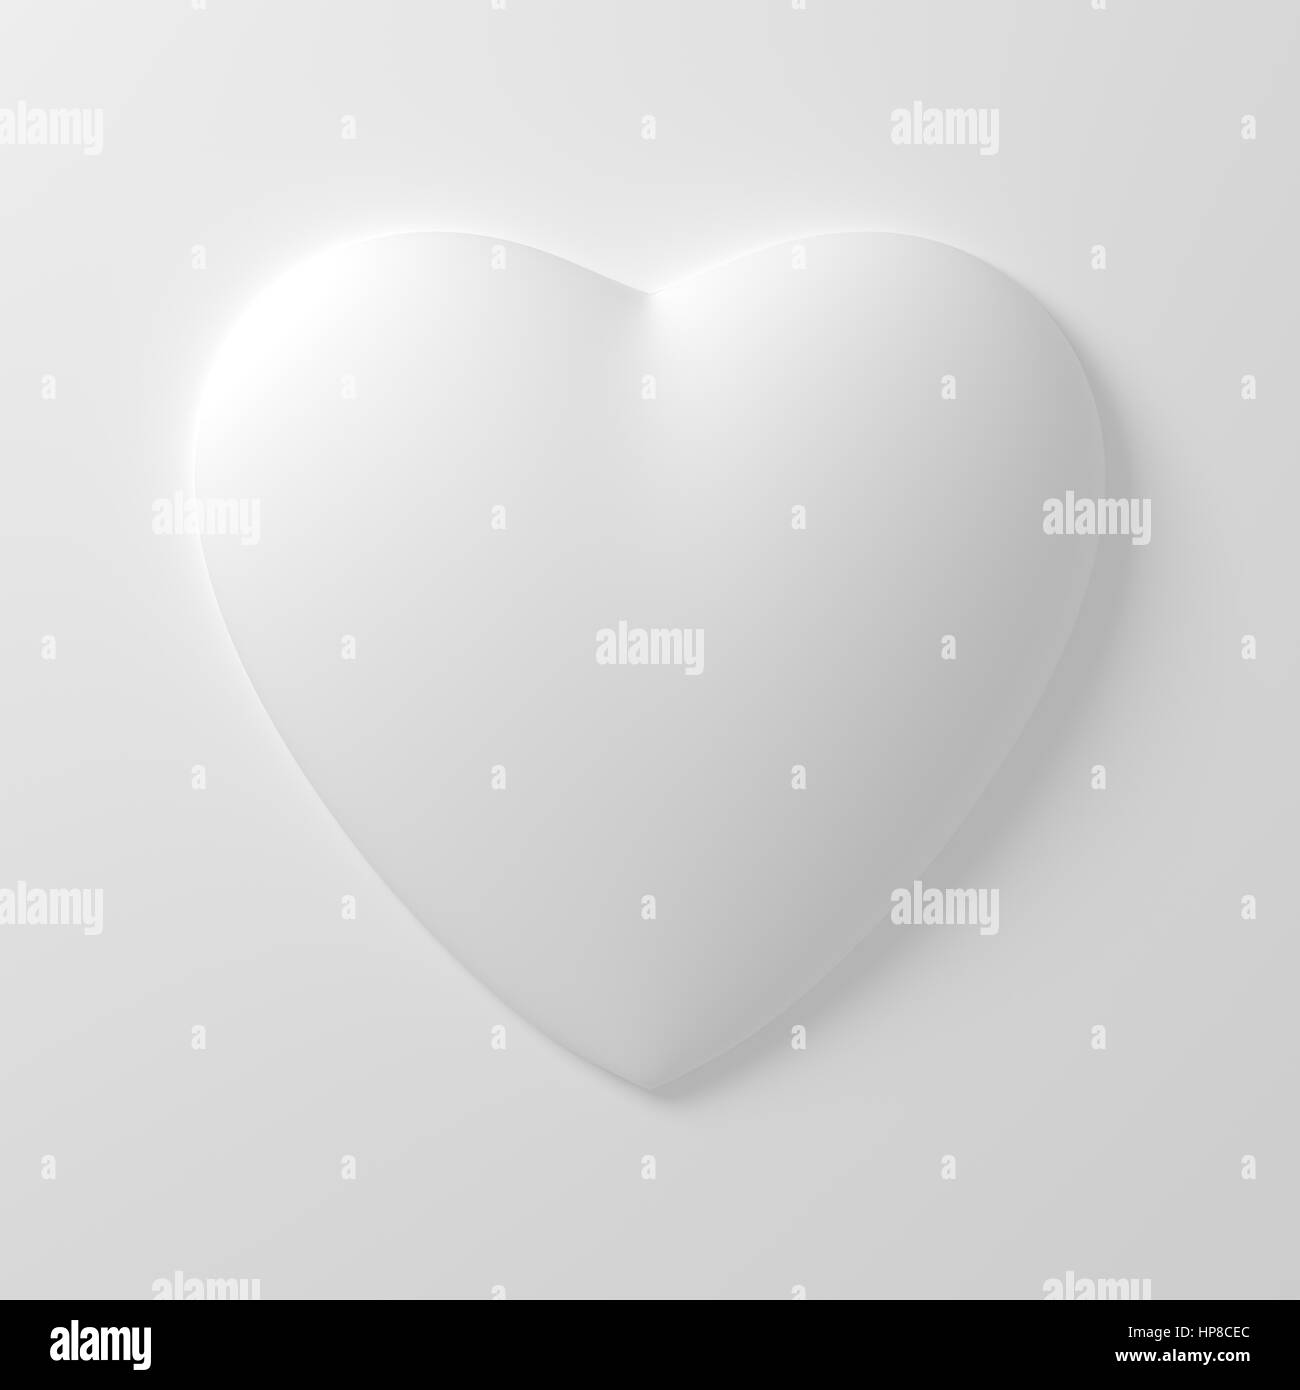 White Heart Shape On White Background. 3D Illustration. Stock Photo